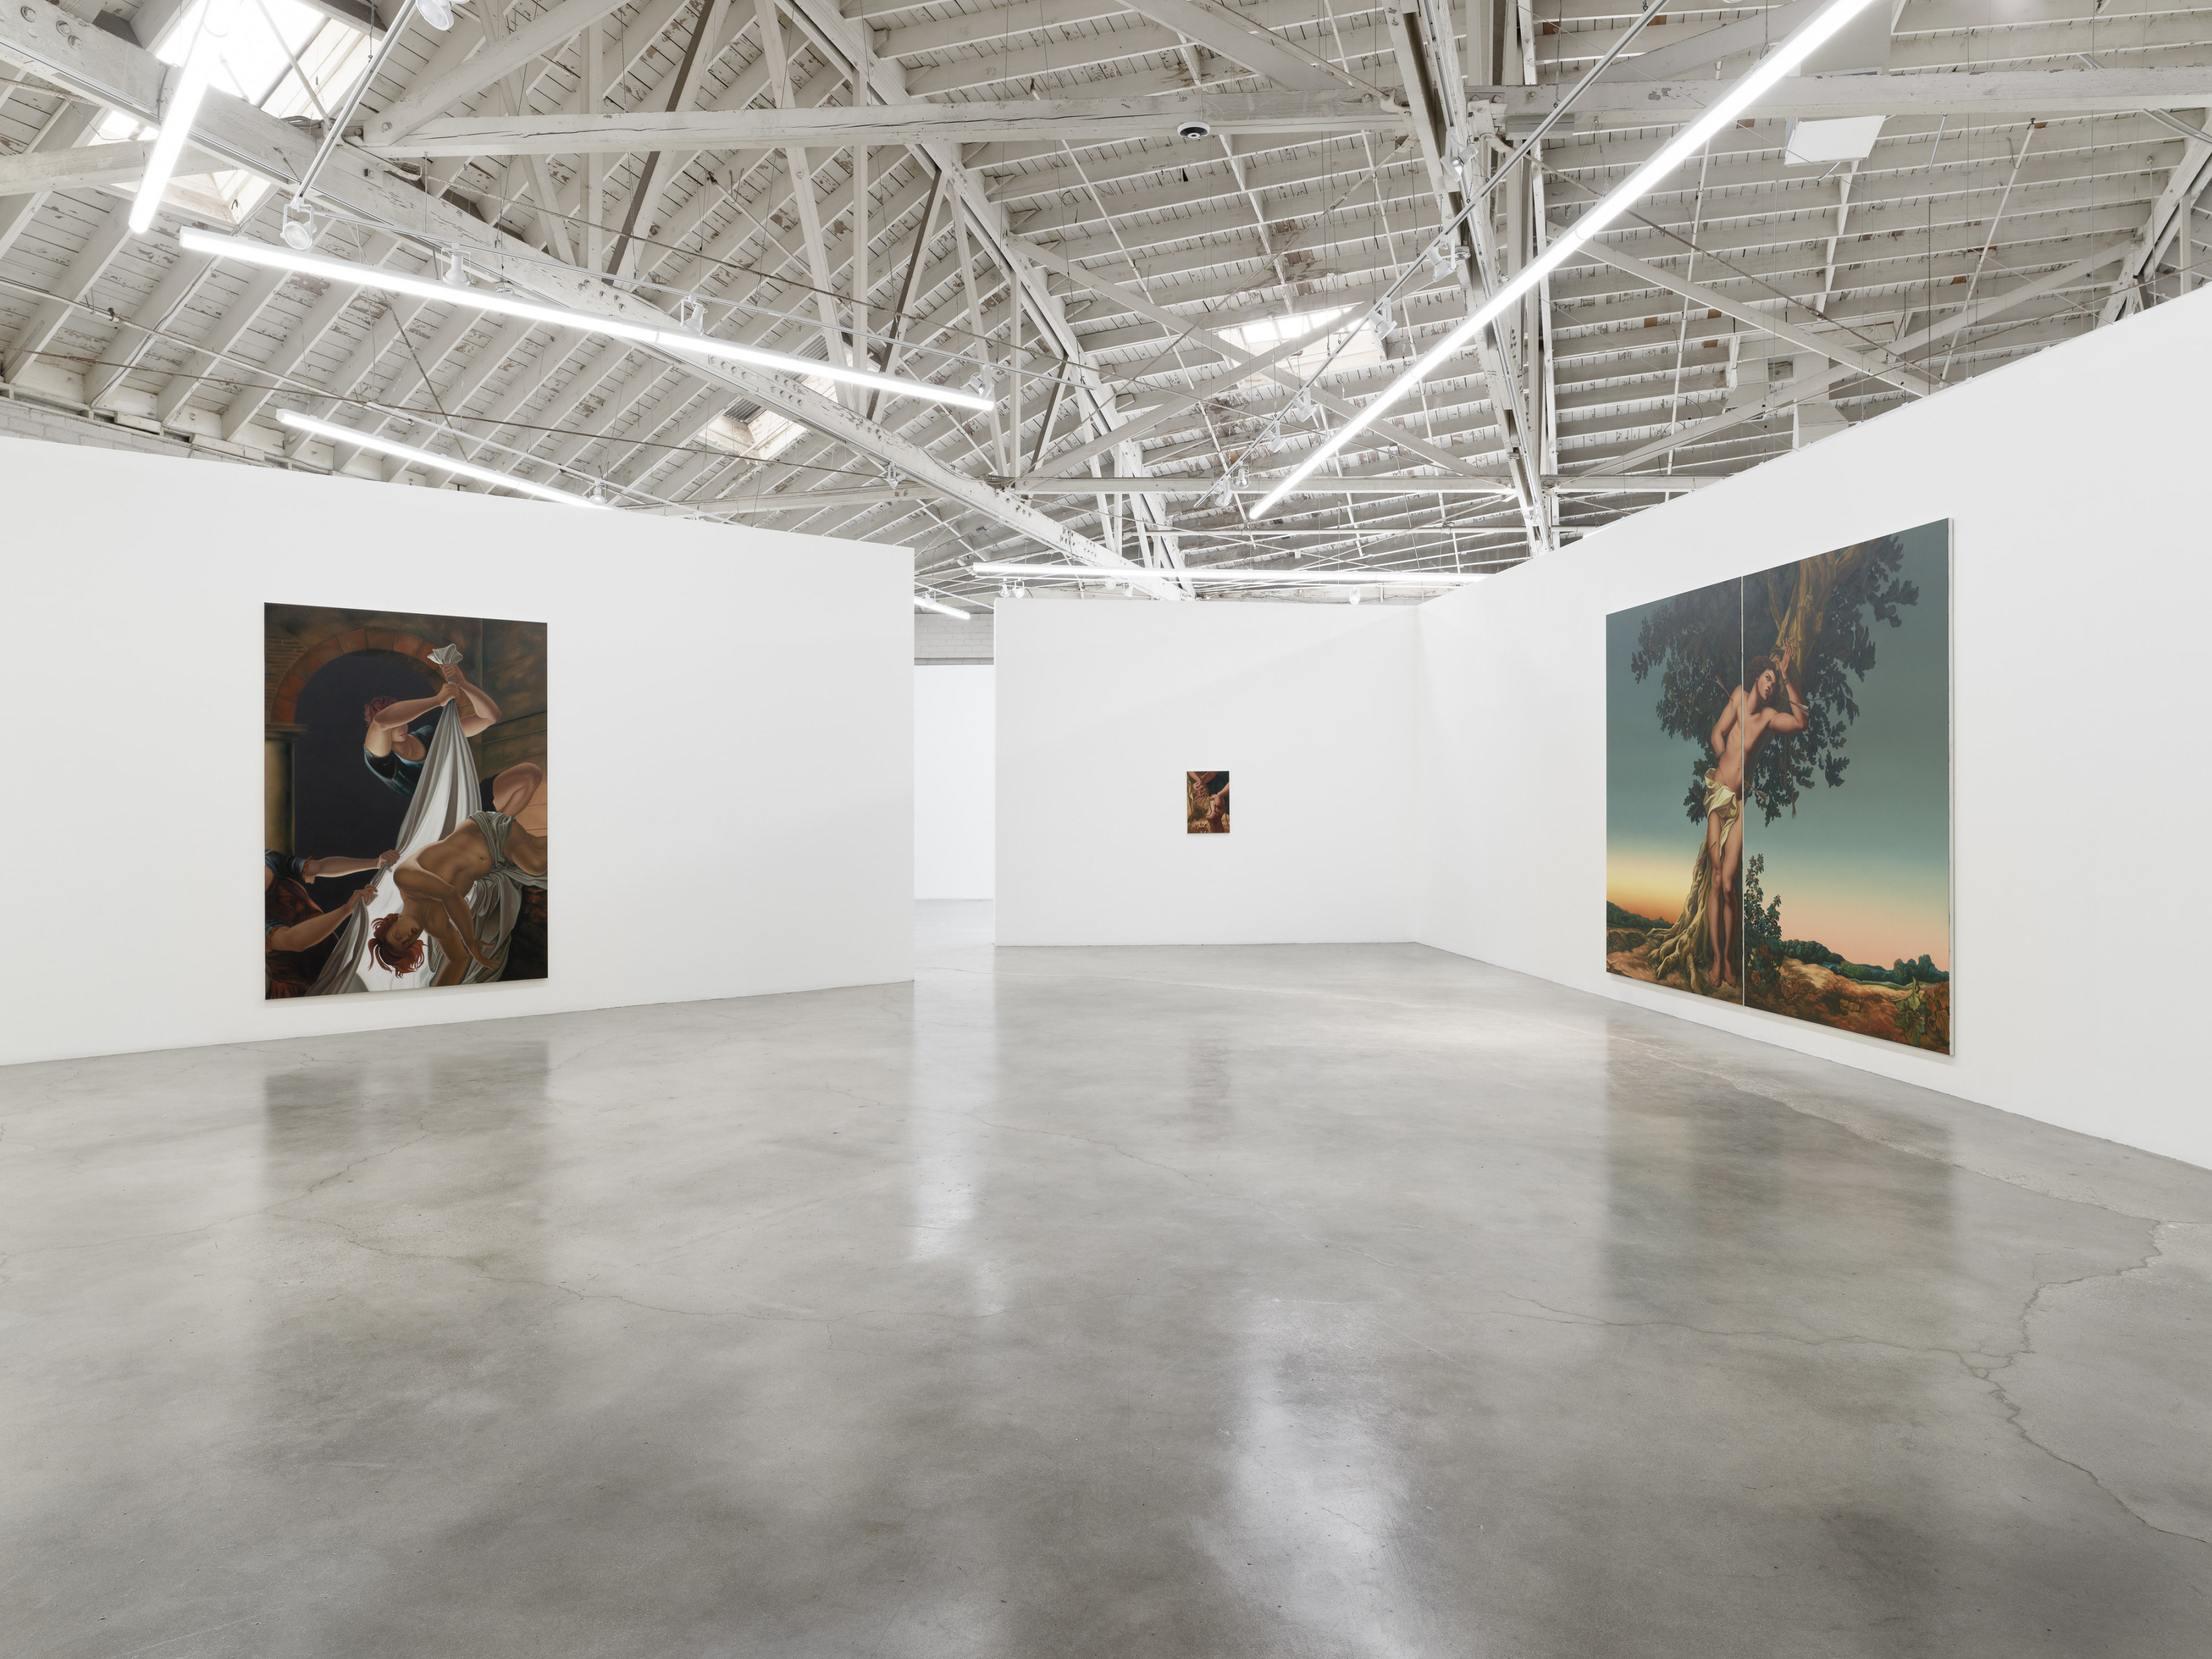 Jesse Mockrin, Reliquary, installation view, 2022